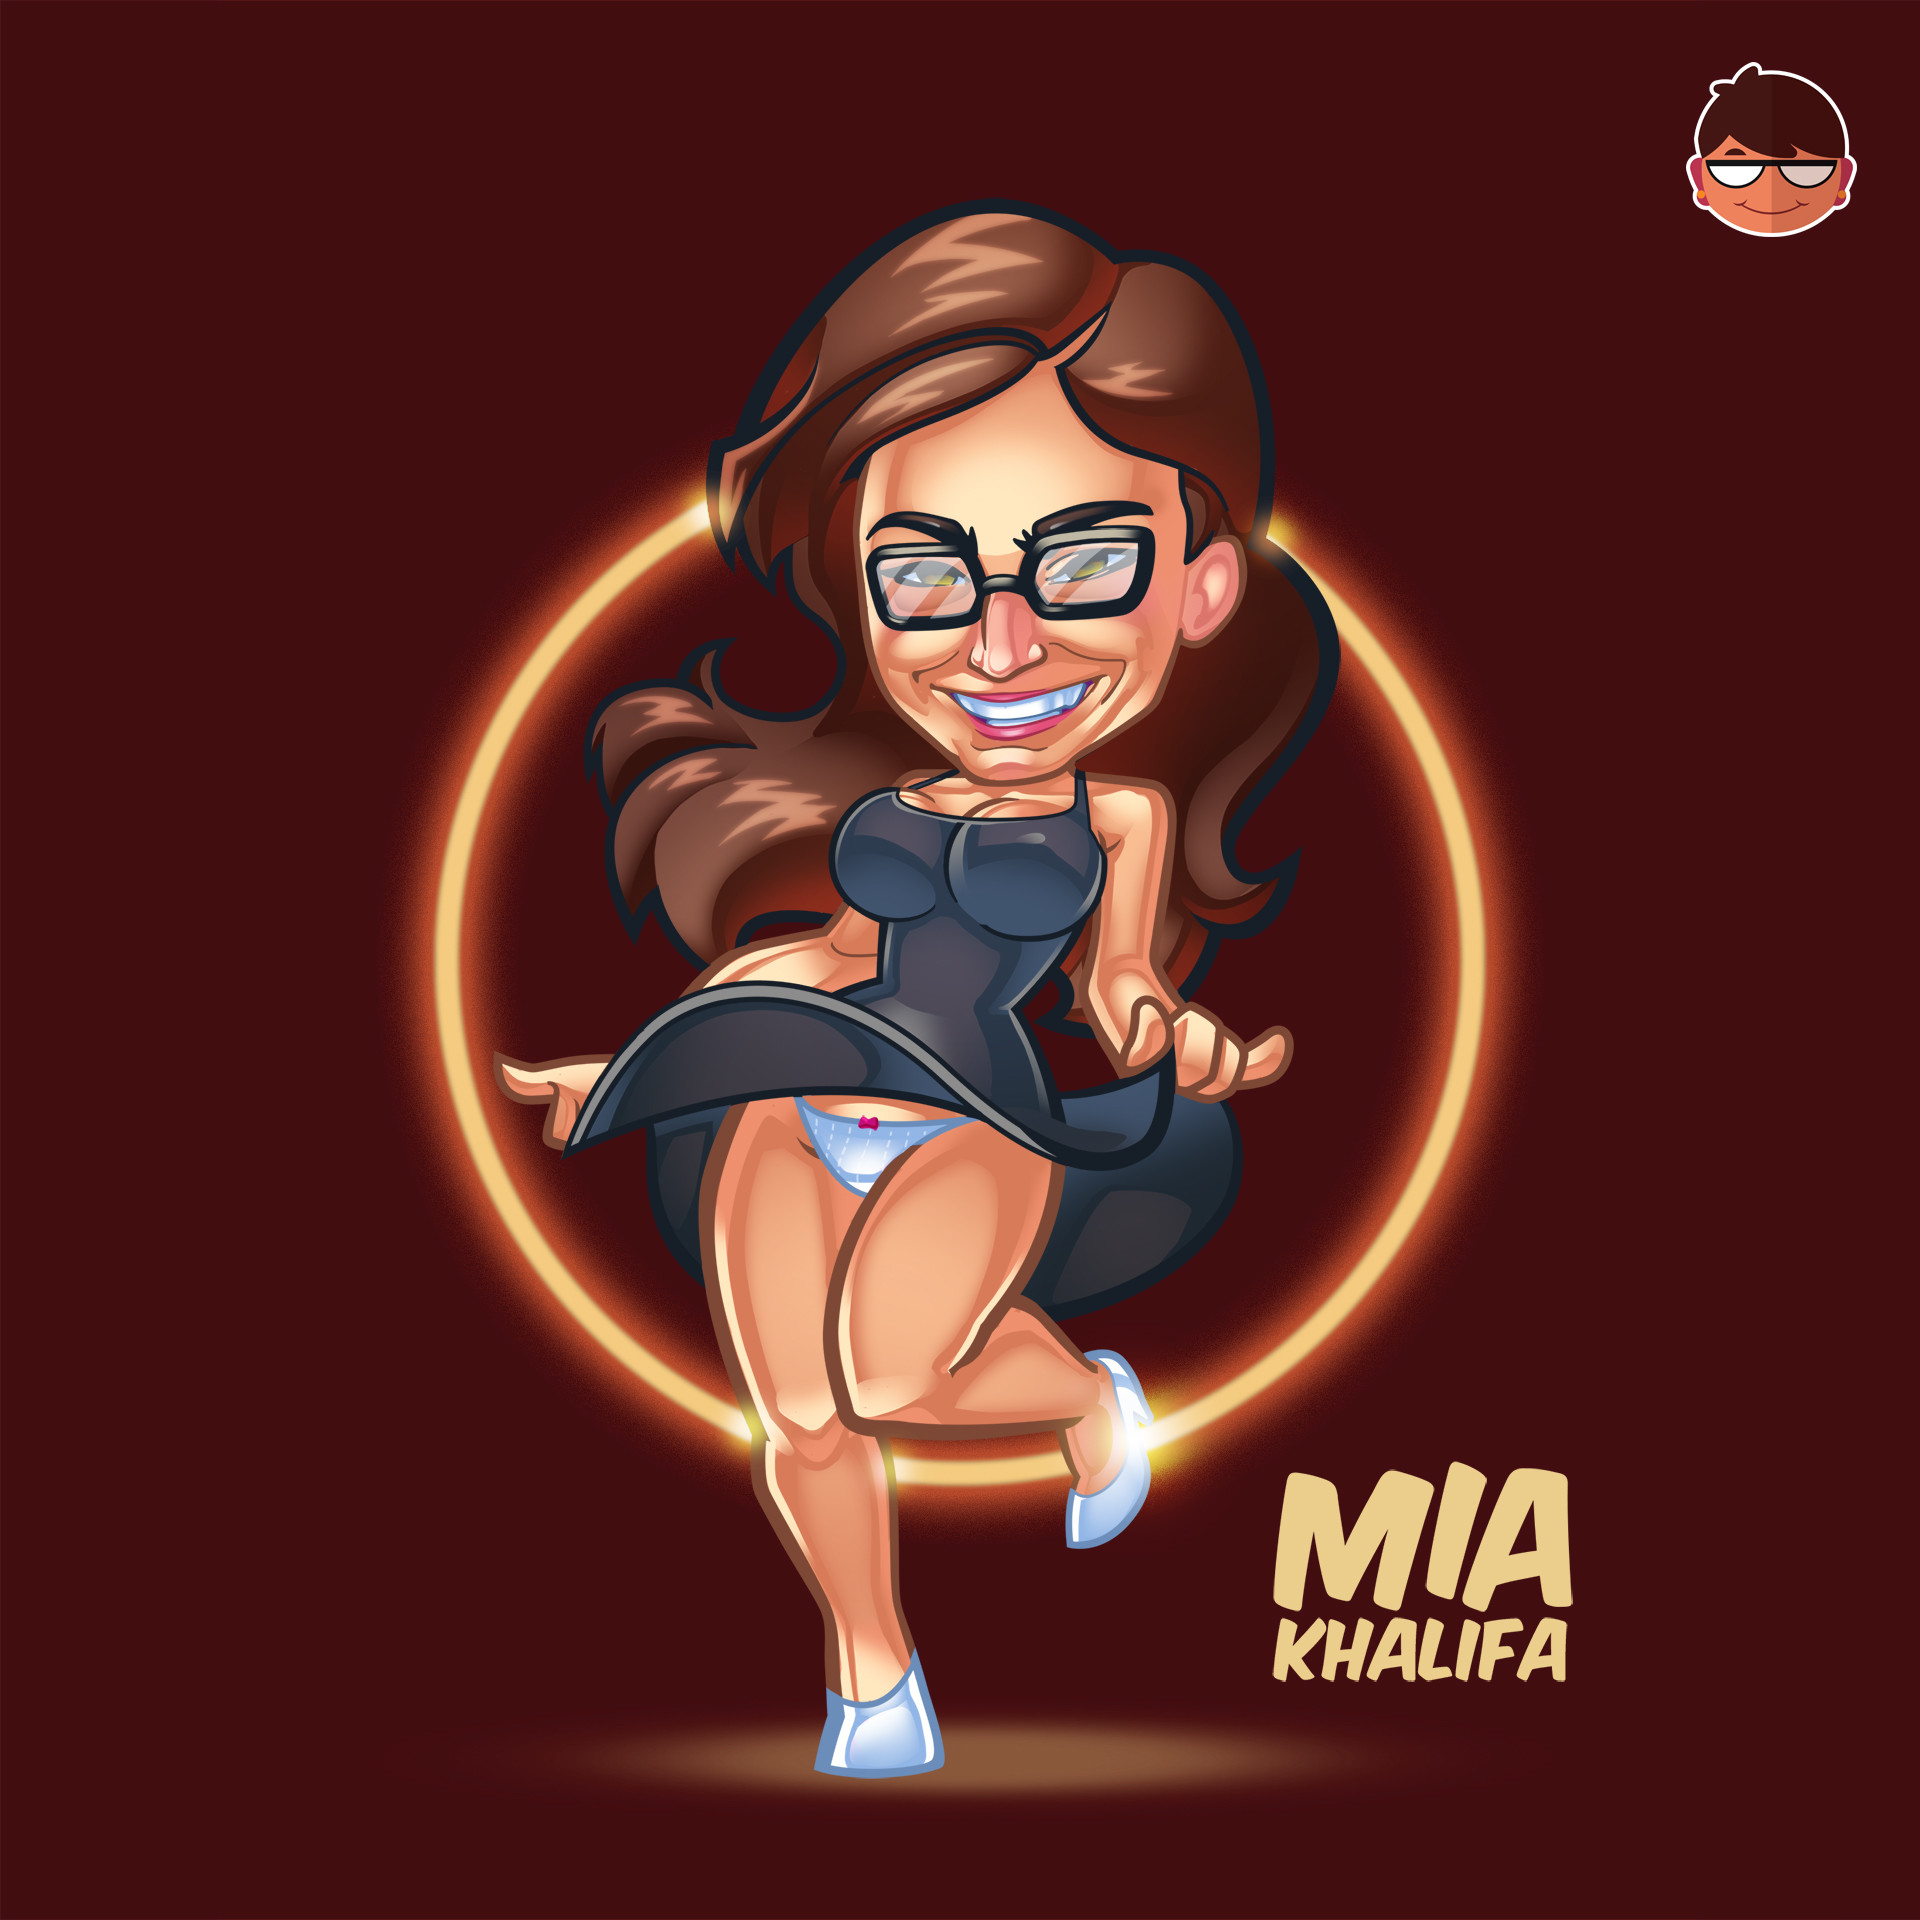 Time Lapse Mia Khalifa Fan Art Illustration.